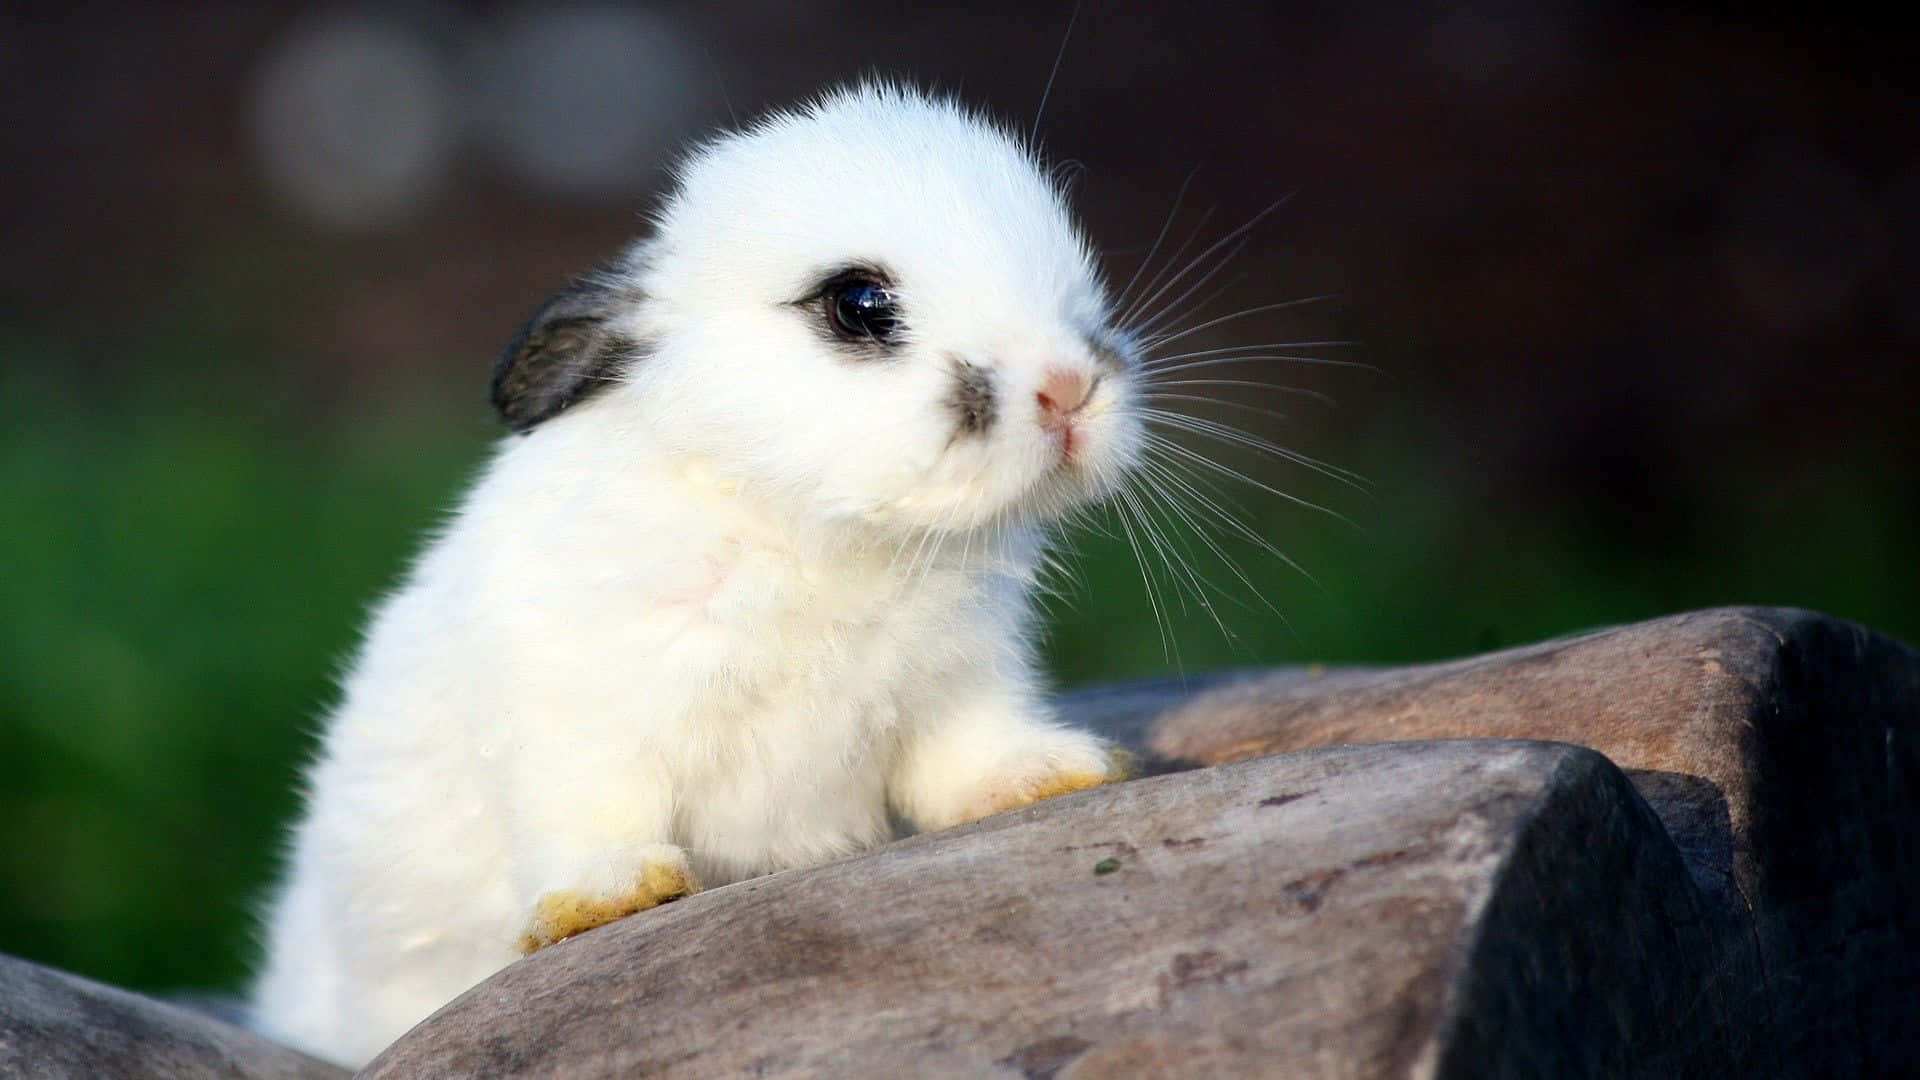 A White Rabbit Sitting On A Rock